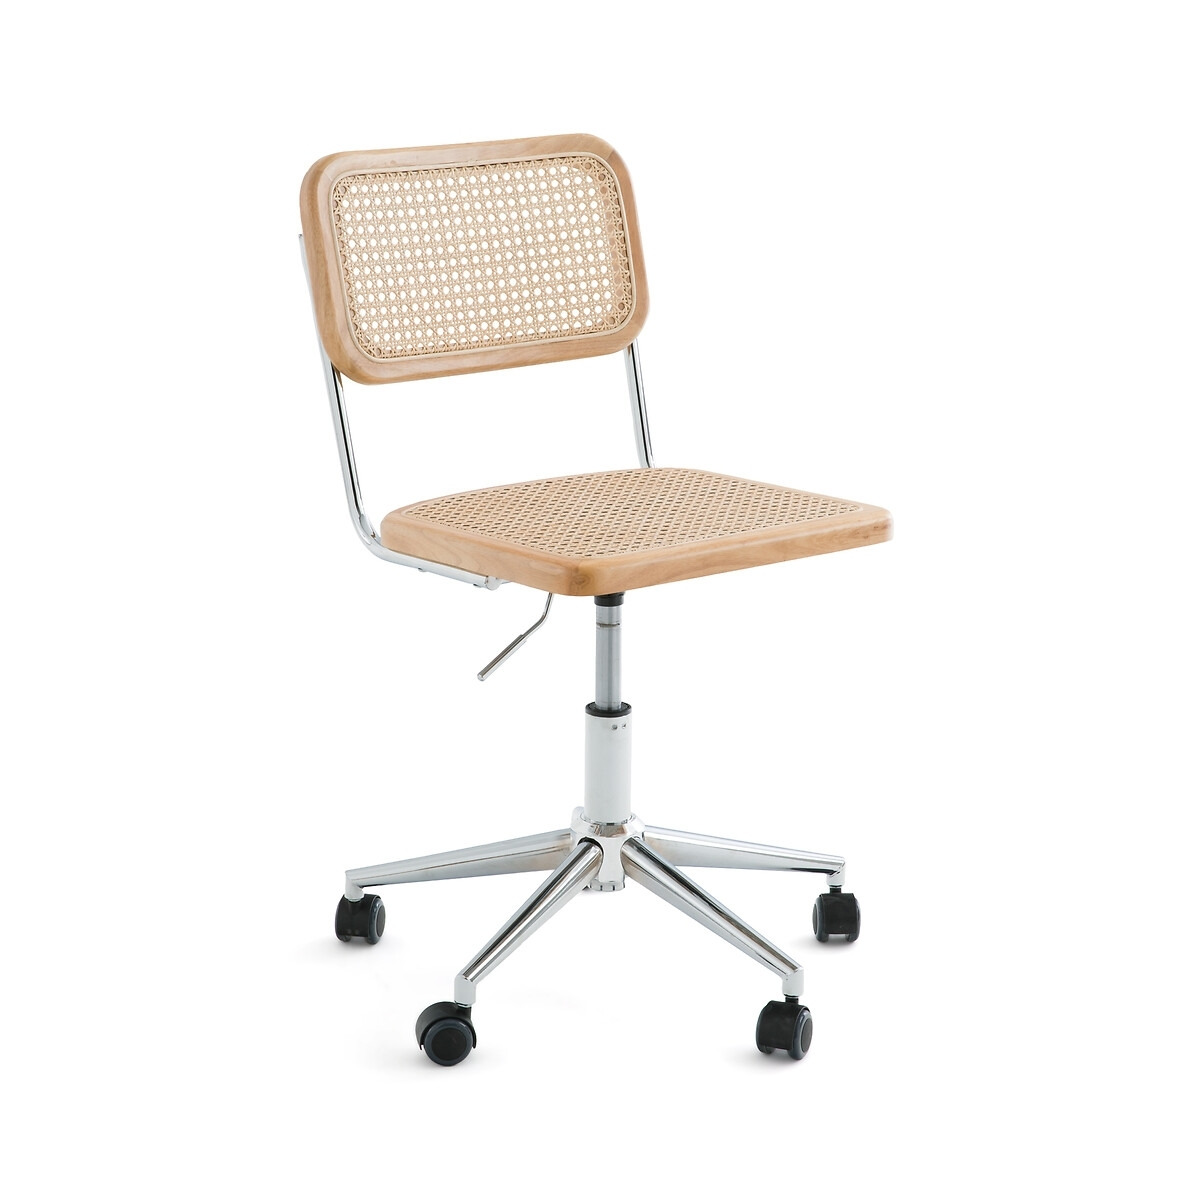 Cedak Cane Portable Office Chair - image 1